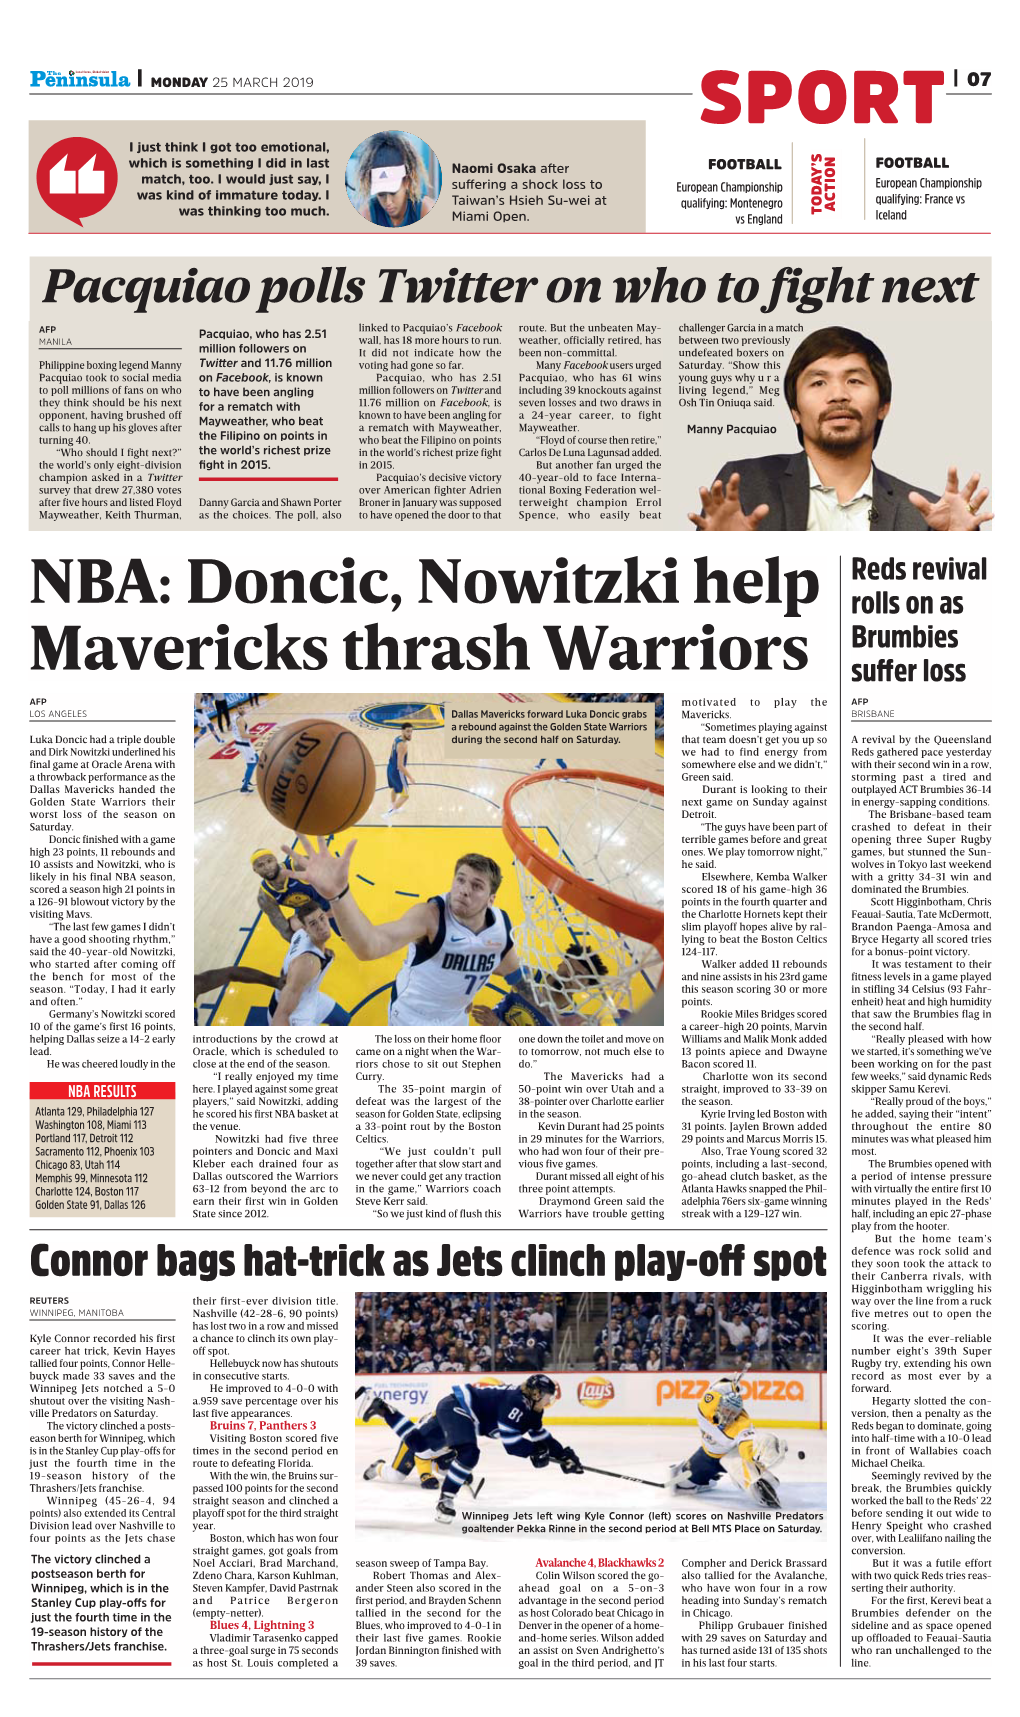 NBA: Doncic, Nowitzki Help Mavericks Thrash Warriors